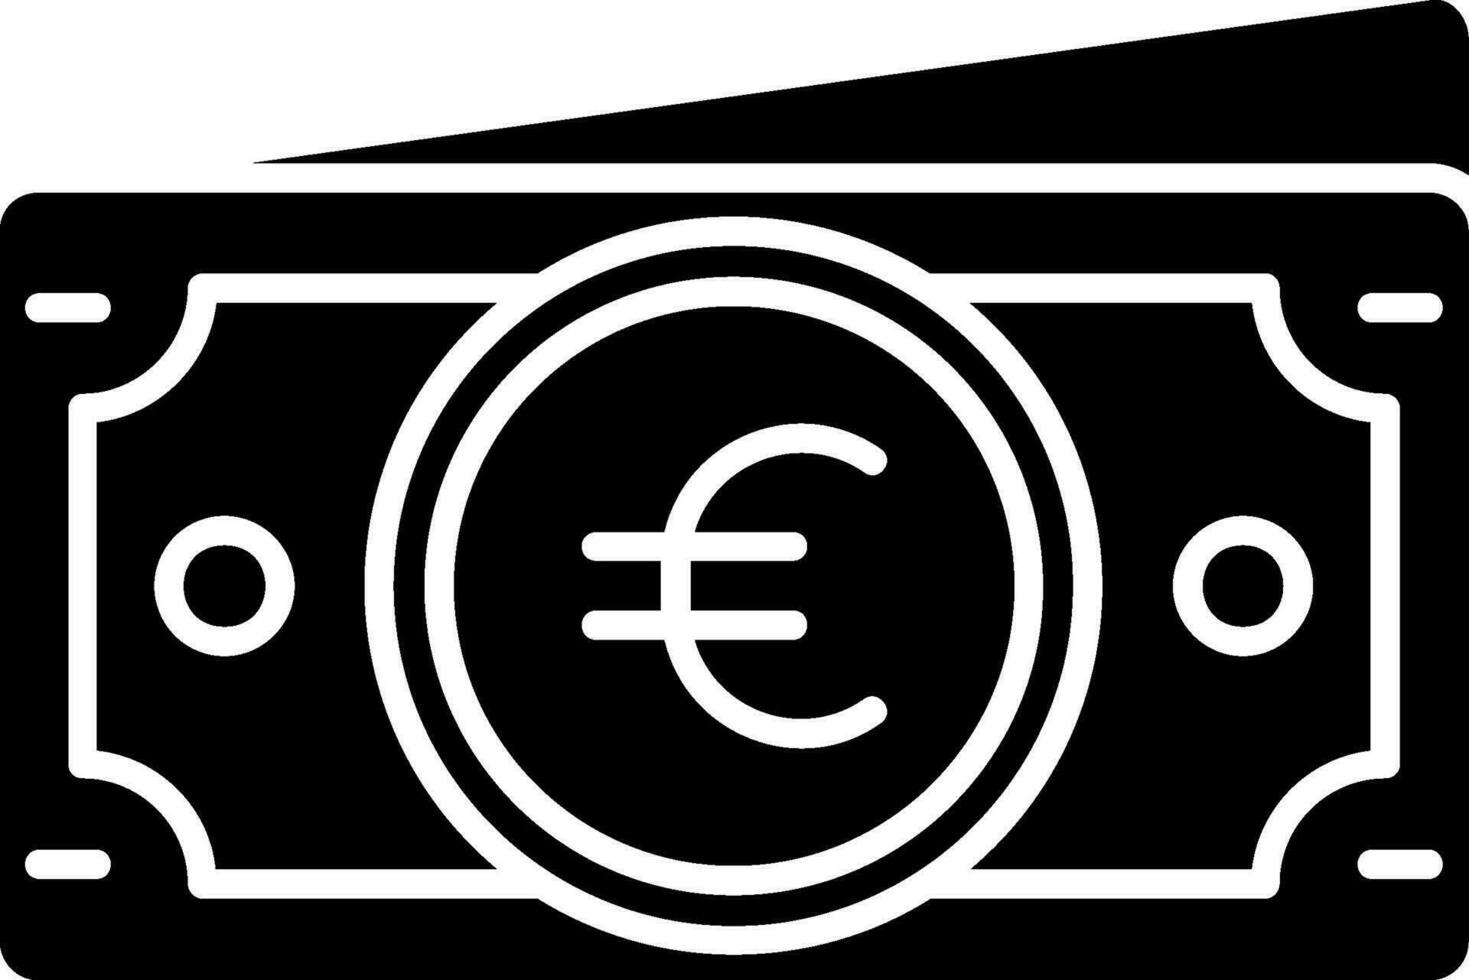 icono de glifo de euro vector